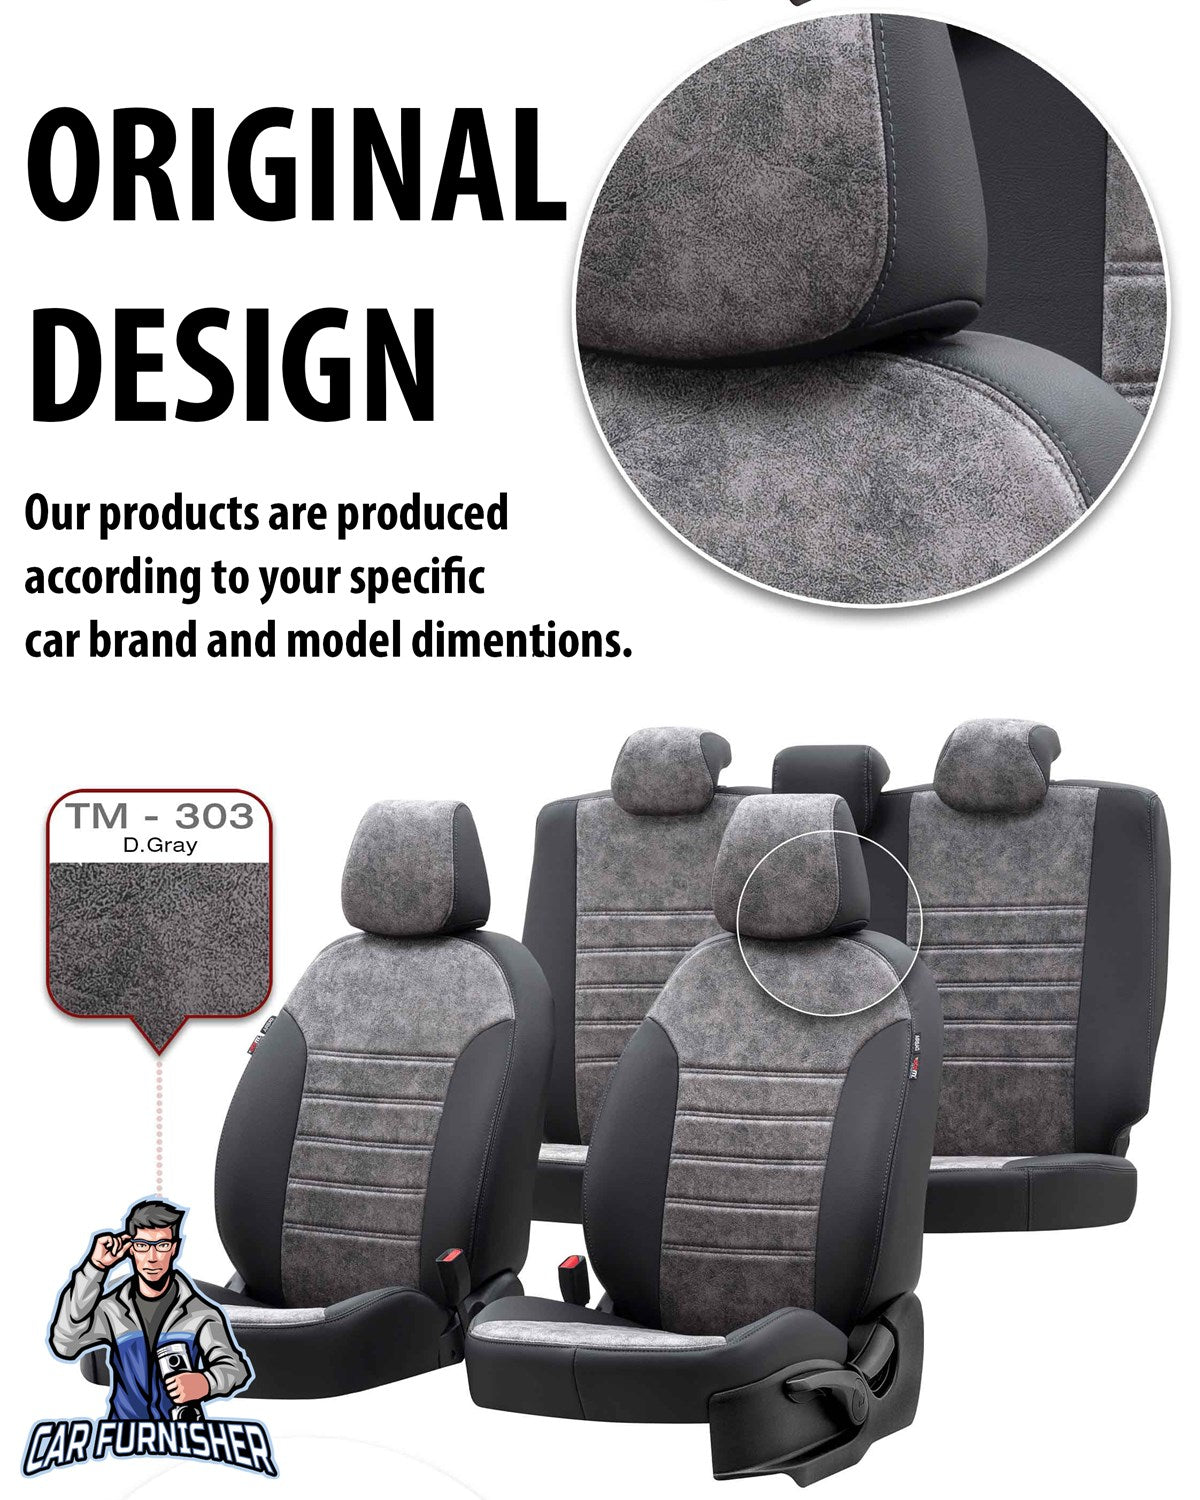 Chery Tiggo Seat Covers Milano Suede Design Burgundy Leather & Suede Fabric